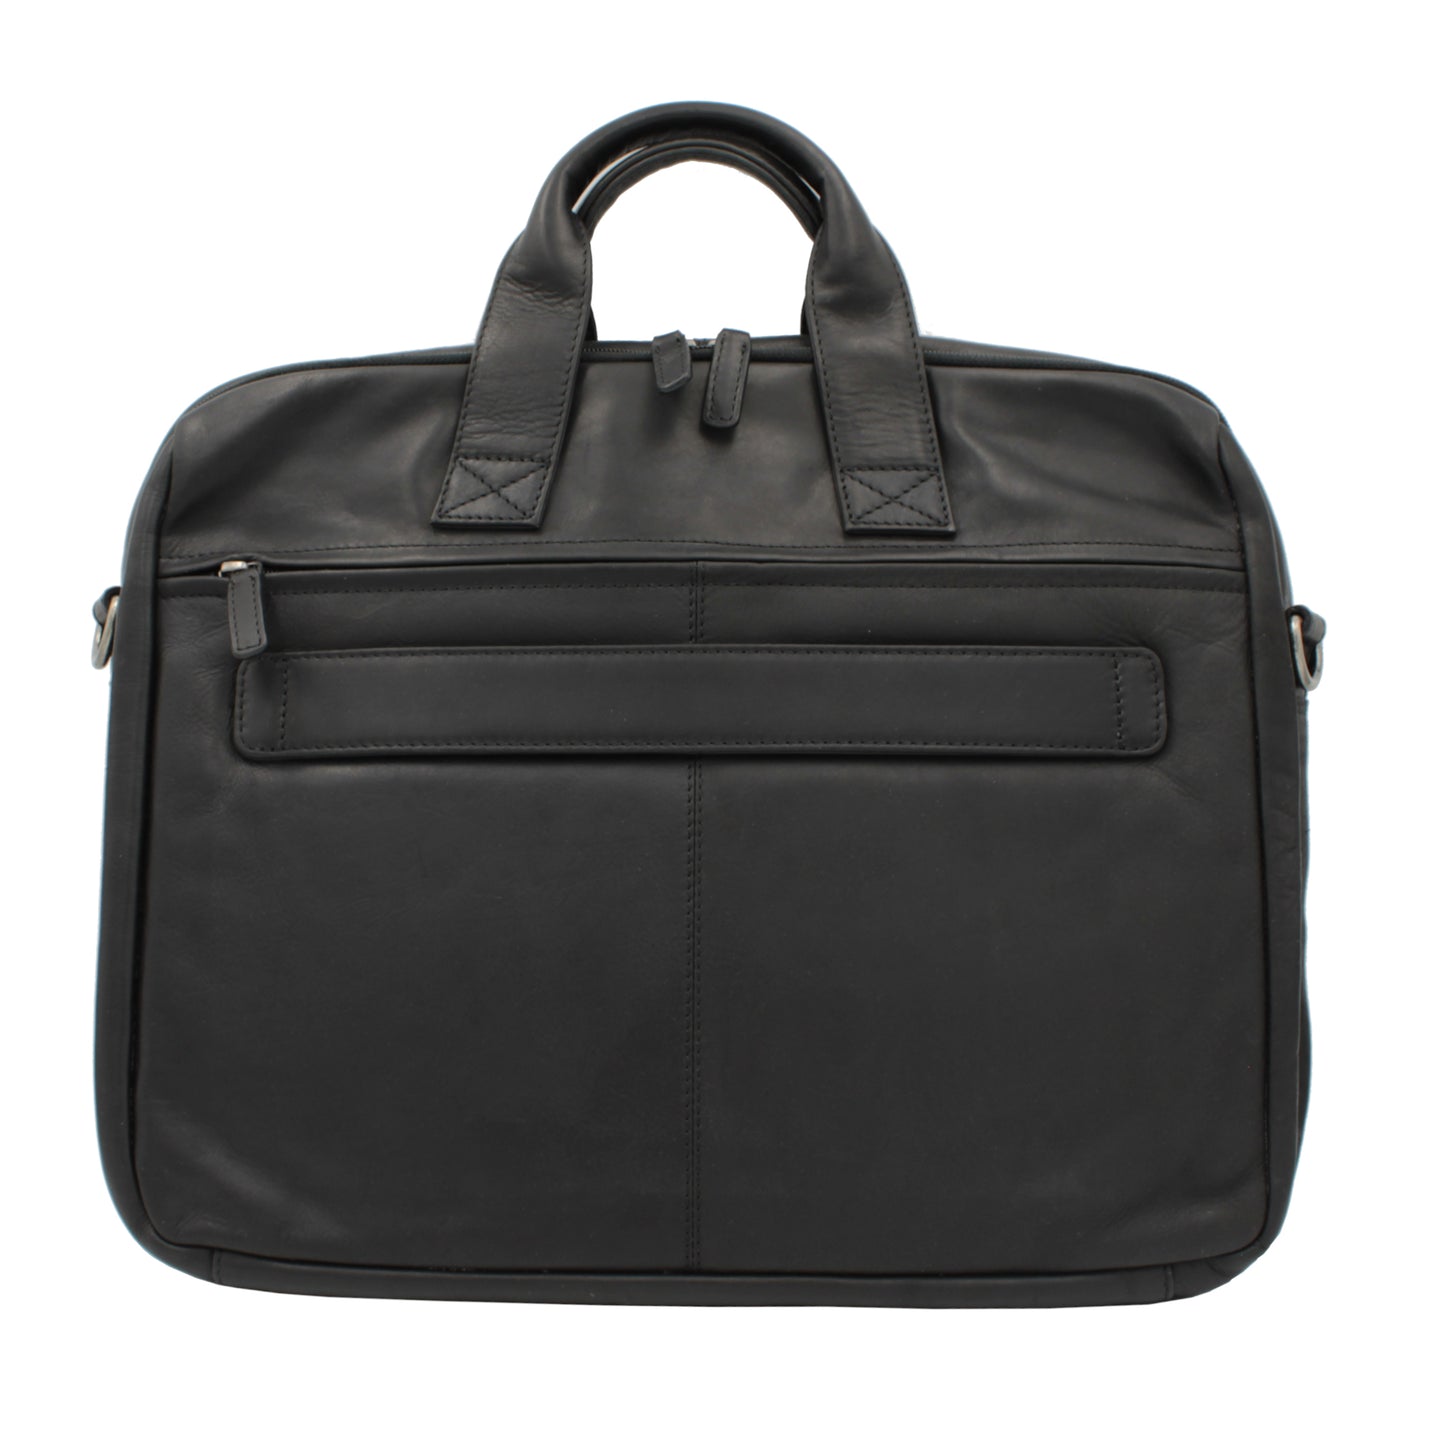 RE Leather Laptop Bag (17"x12.5"x4")